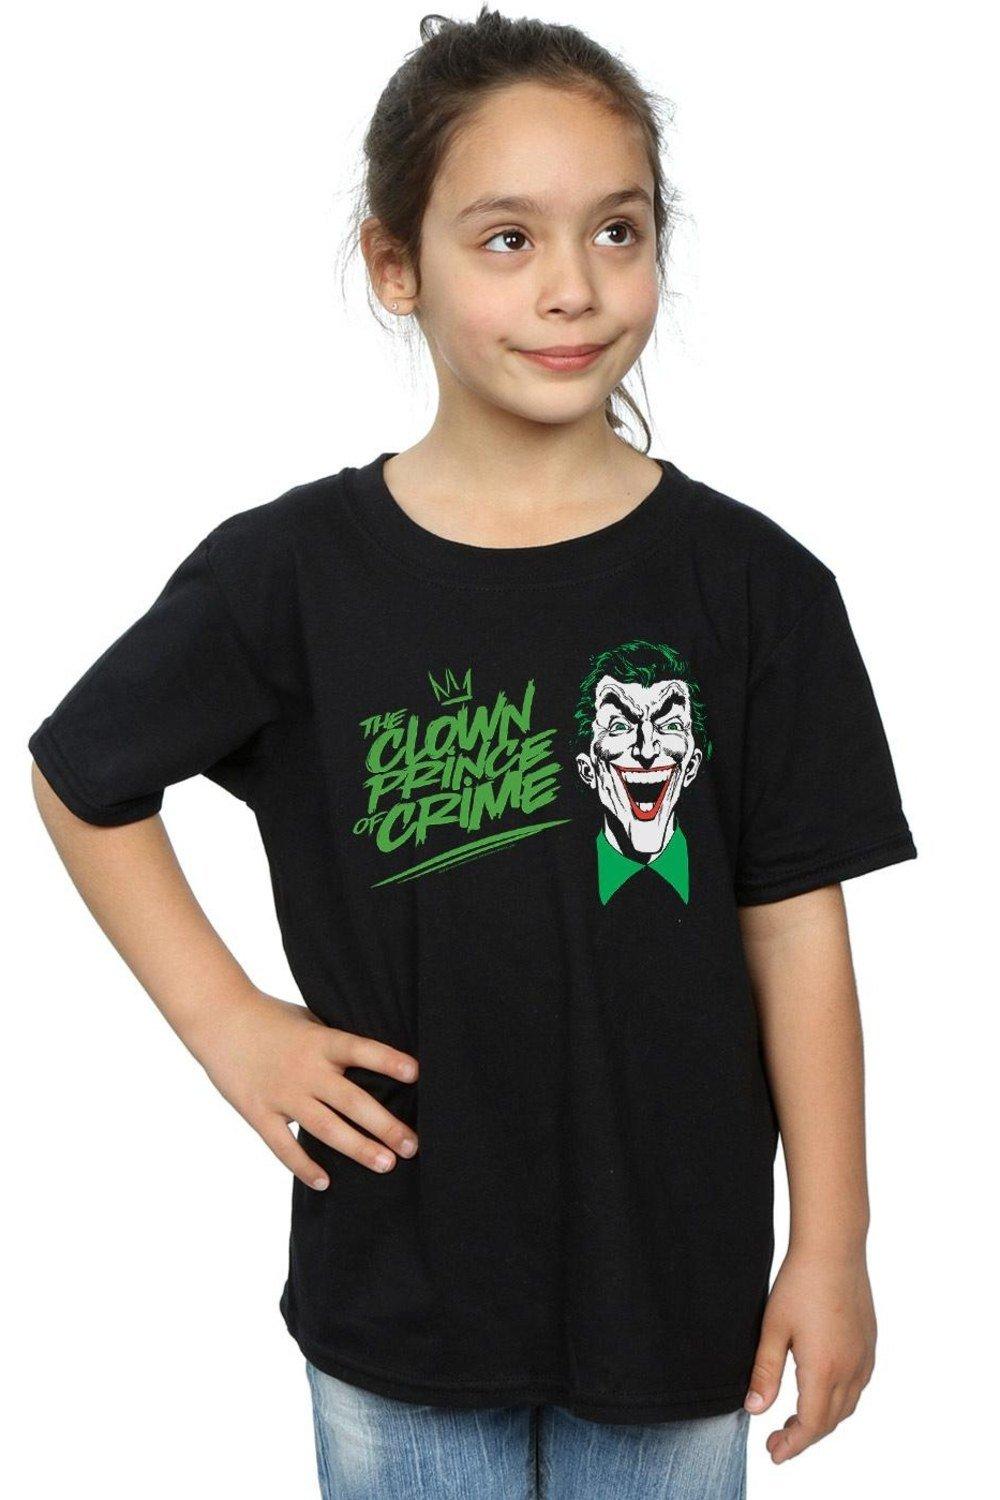 Batman Joker The Clown Prince Of Crime Cotton T-Shirt